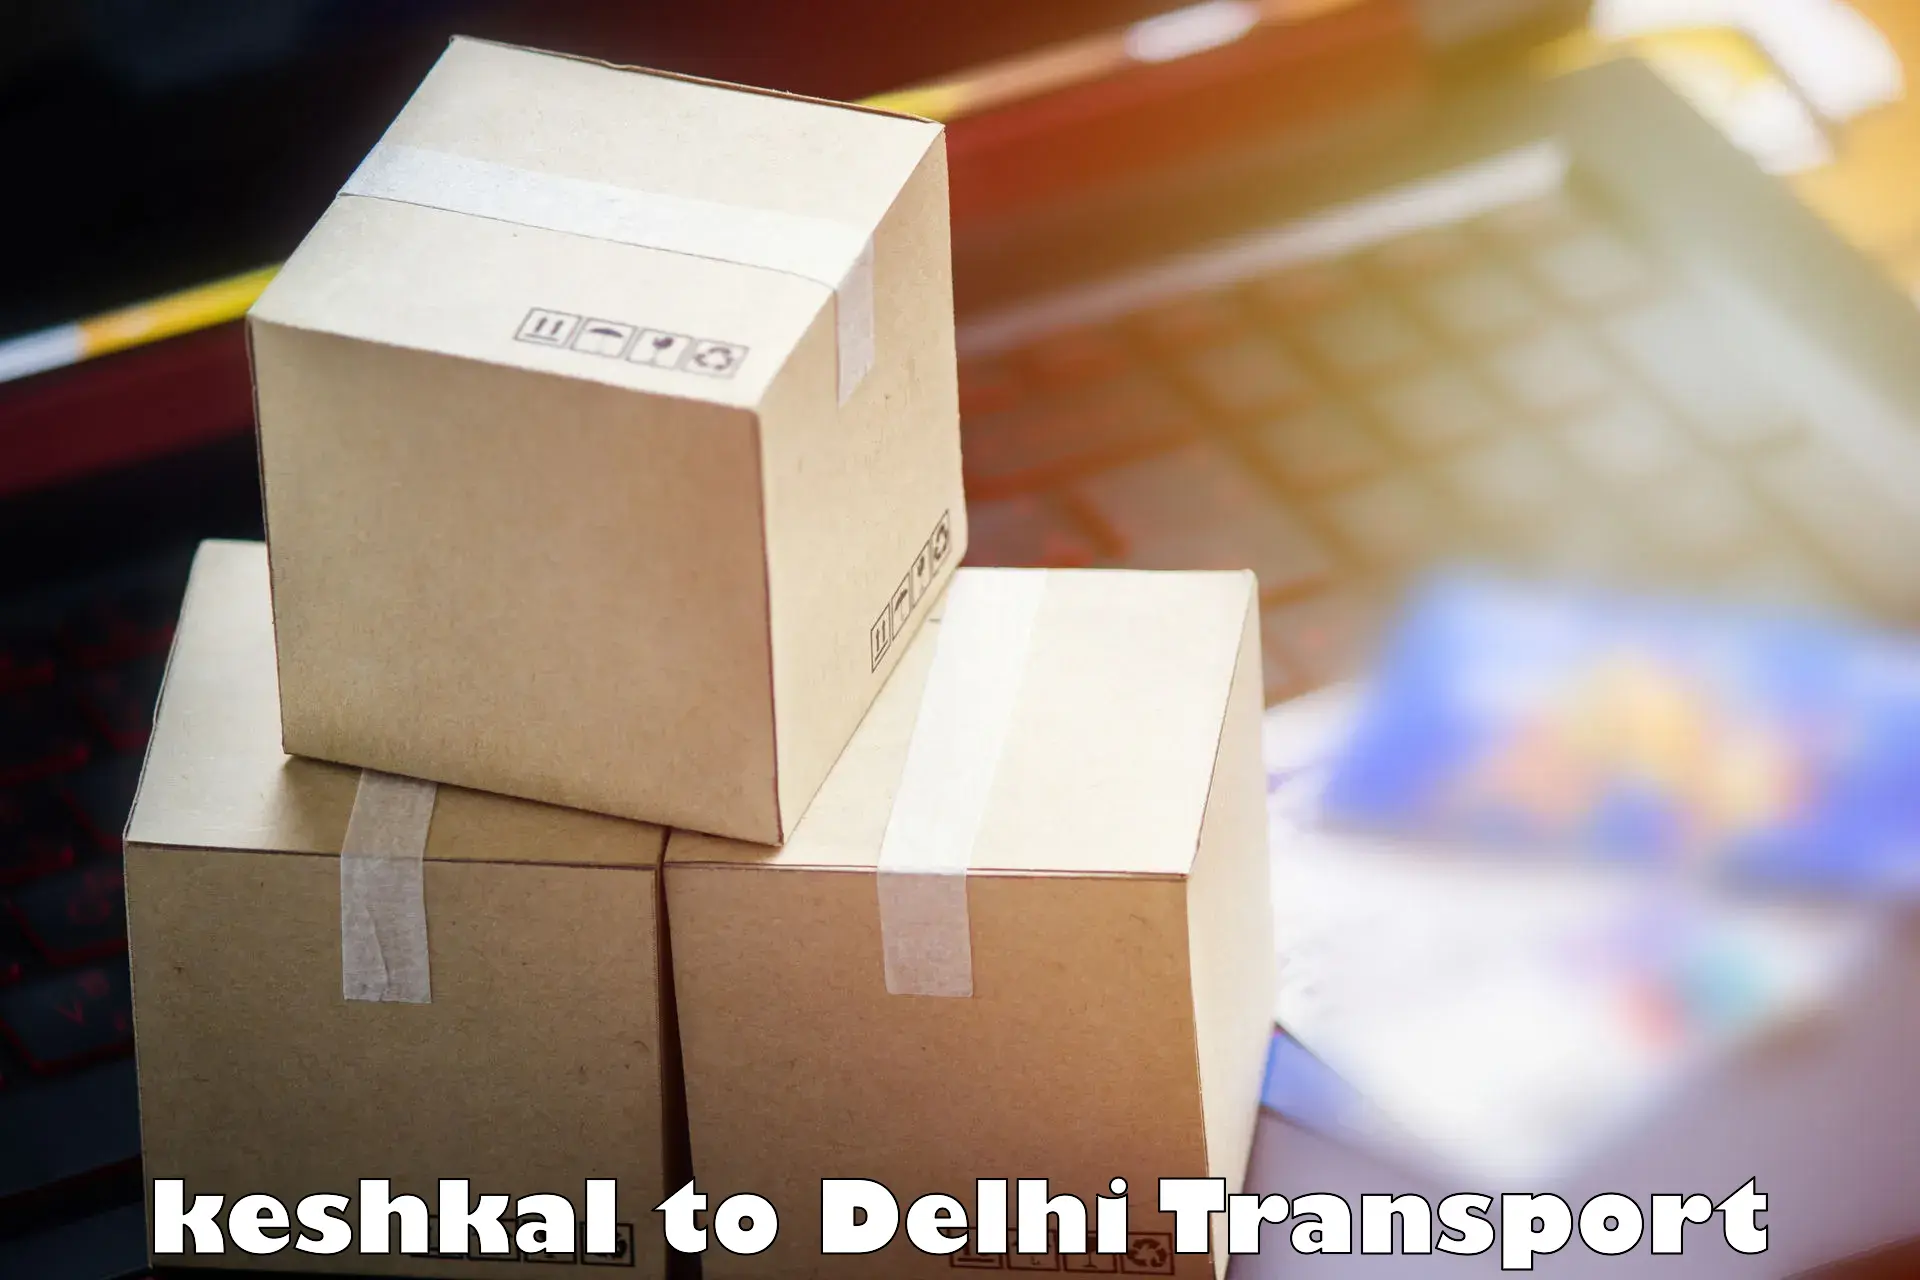 Truck transport companies in India keshkal to Delhi